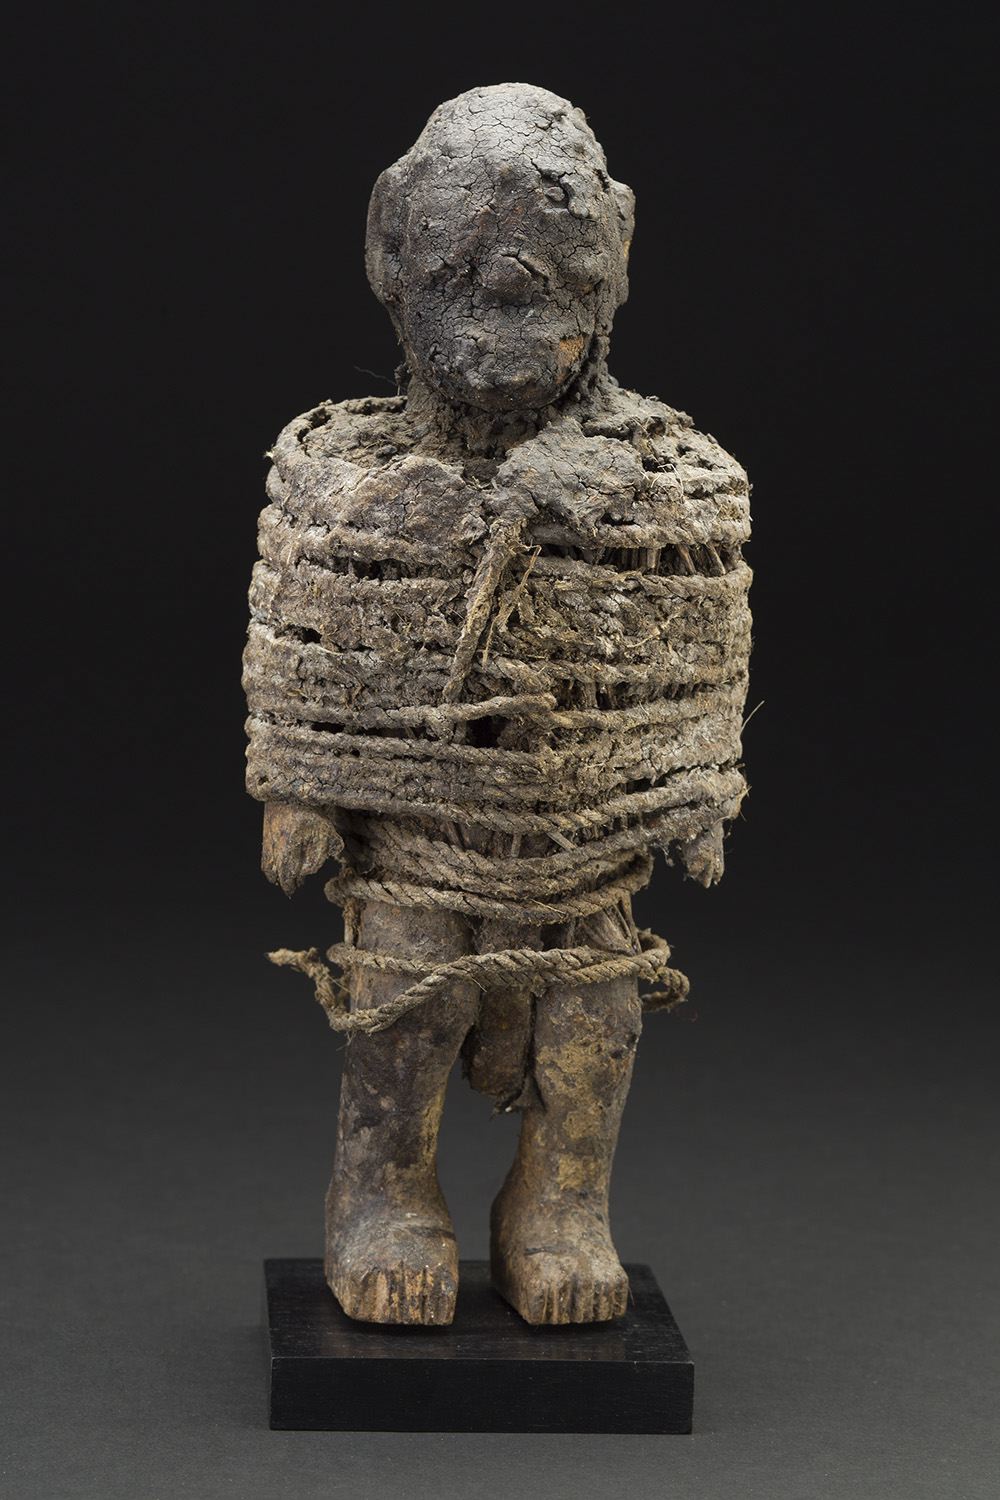   Africa    Vodun Sculpture - Adja People - Benin  , Mid. 20th C. Wood, metal, fiber, sacrificial materials 10.5 x 4 x 3.5 inches 26.7 x 10.2 x 8.9 cm Af 307 